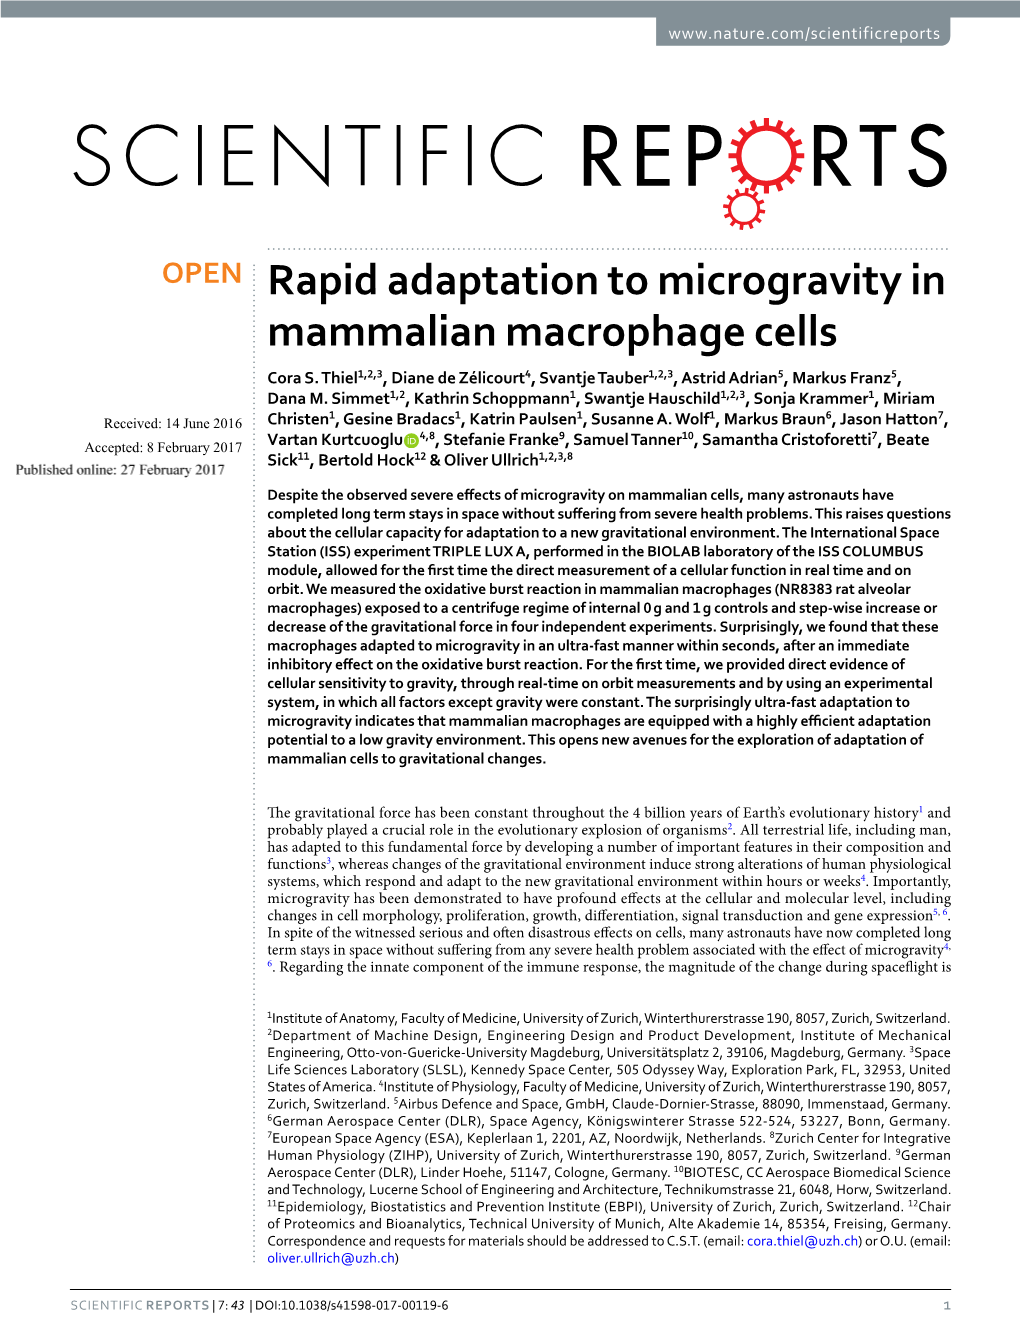 Rapid Adaptation to Microgravity in Mammalian Macrophage Cells Cora S